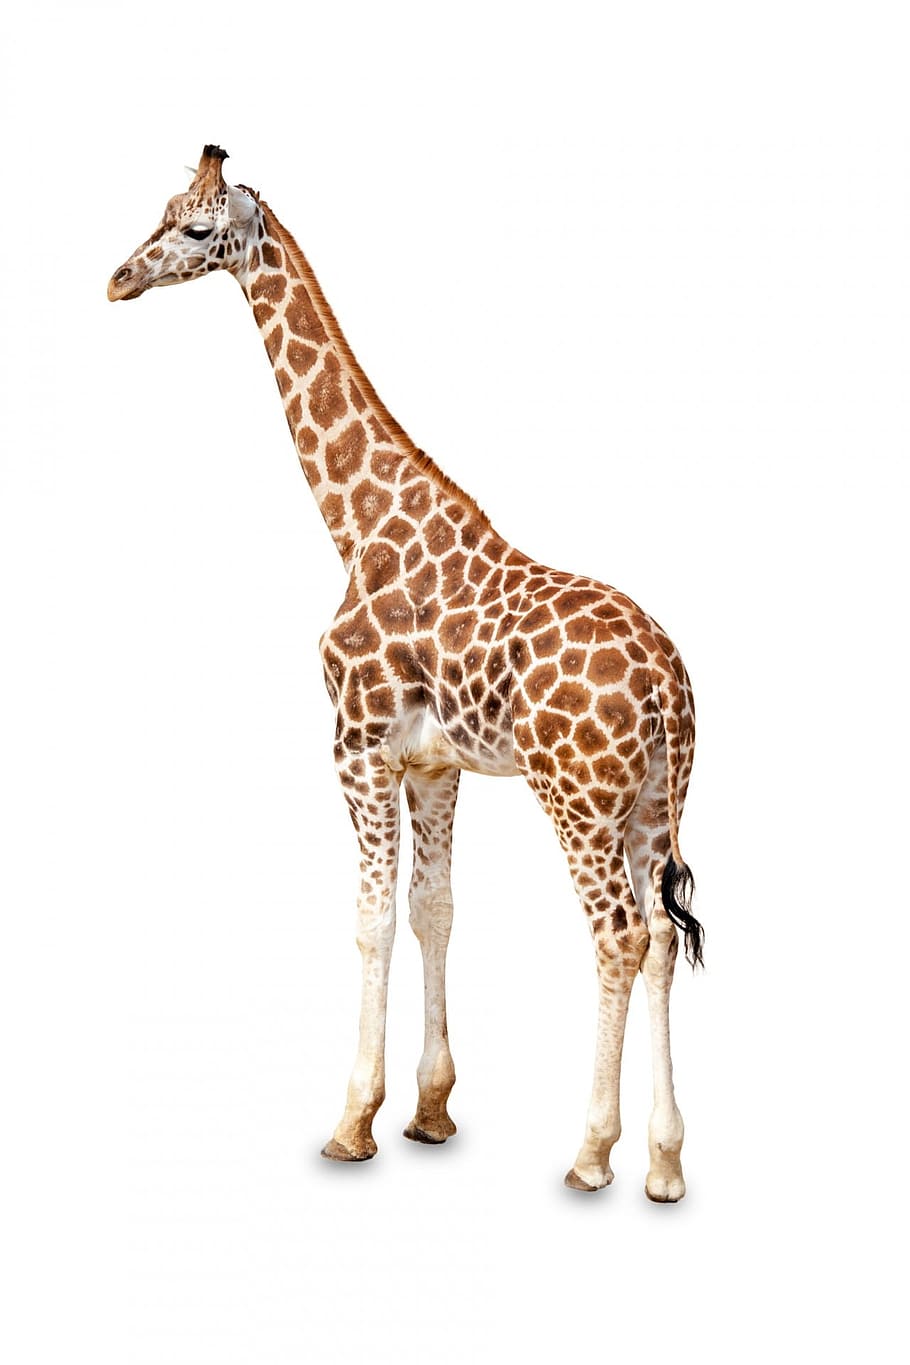 adult giraffe, africa, african, animal, big, brown, standing